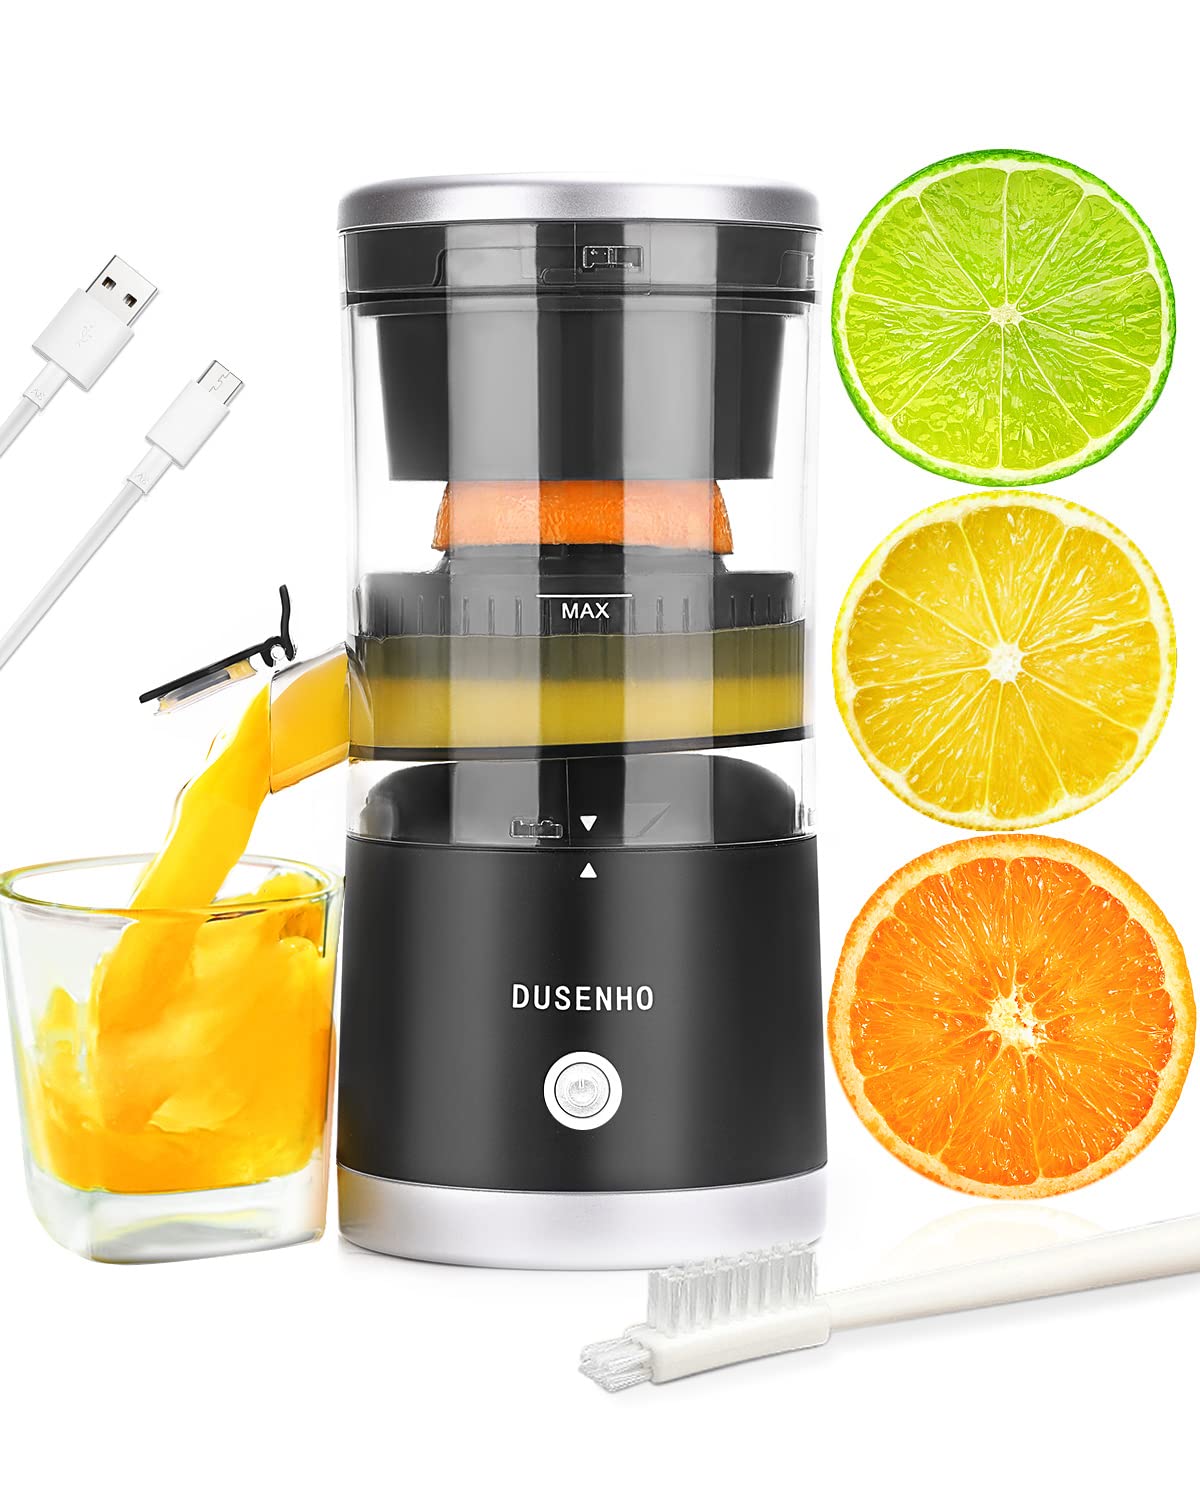 DUSENHO Citrus Juicer Machines Rechargeable - Portable Juicer with USB and Cleaning Brush for Orange, Lemon, Grapefruit